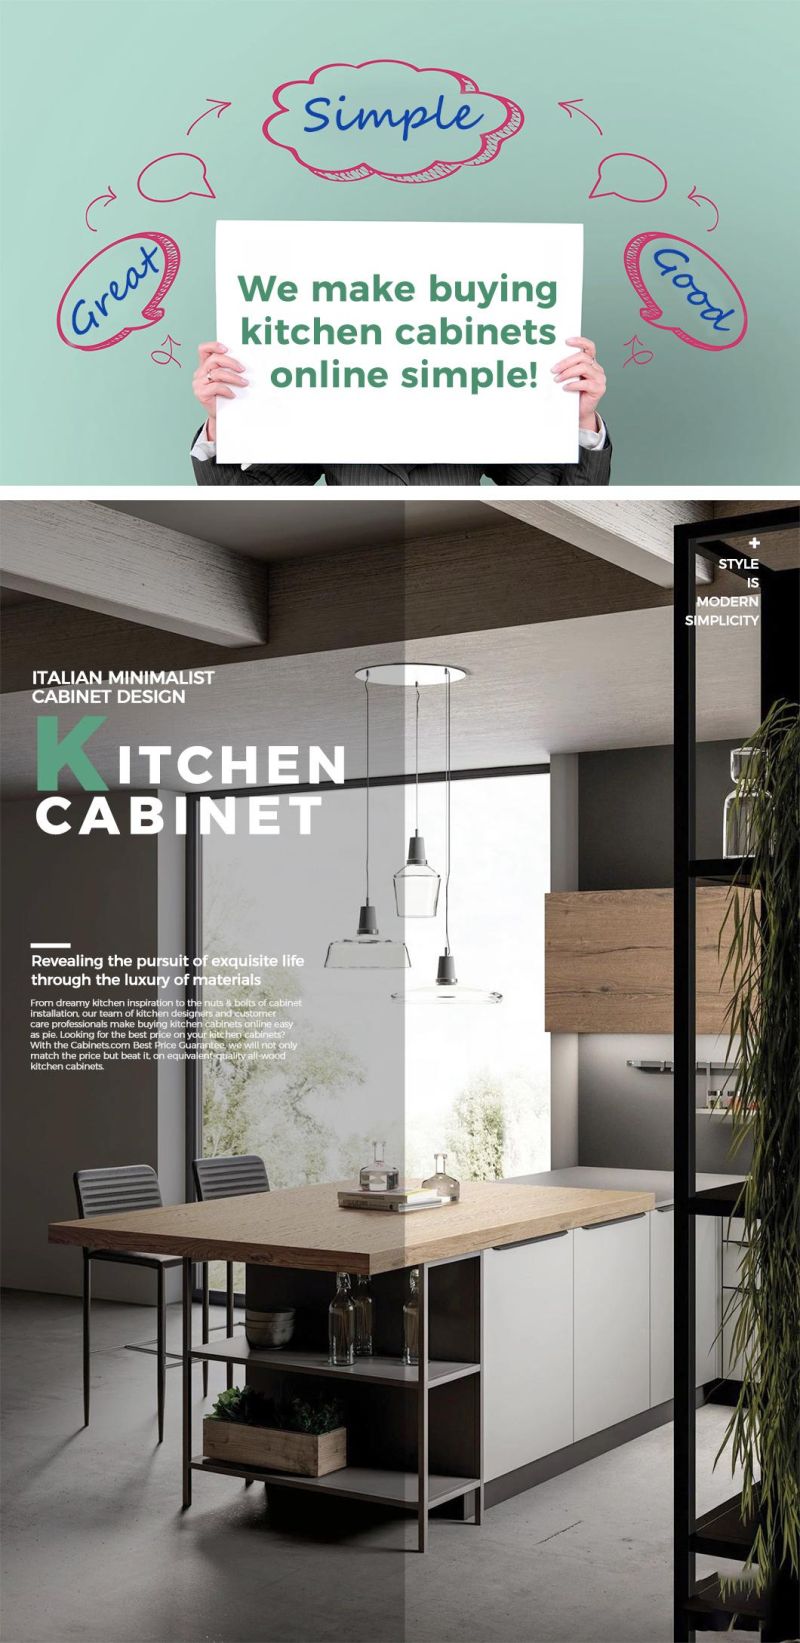 Hot Selling American Luxury High Quality Wood Grain Hampter Door Design Kitchen Cabinet